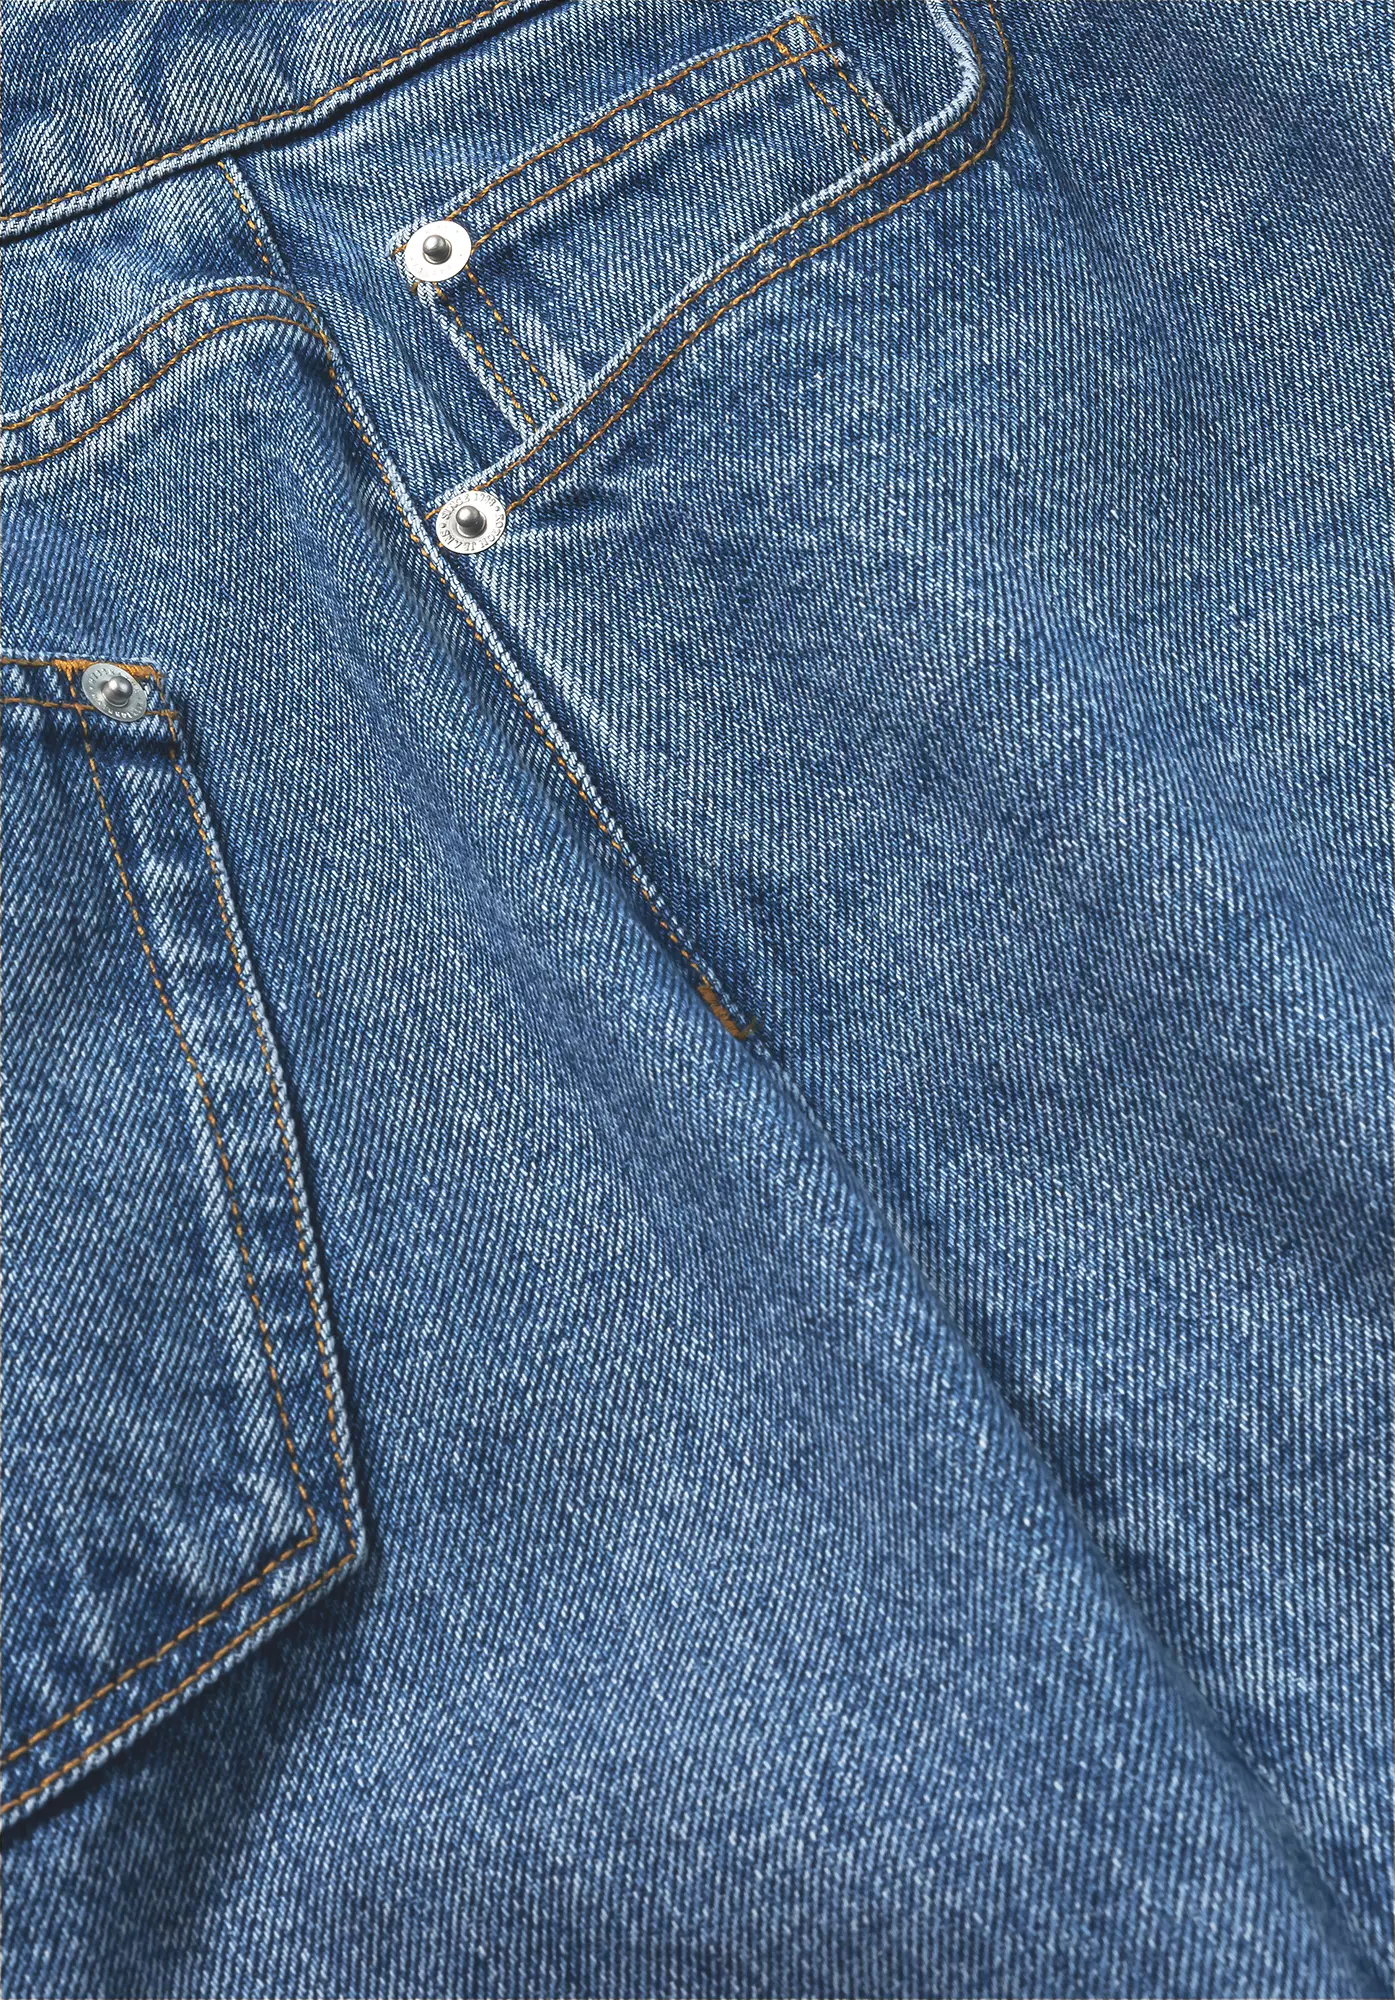 WUNDERKIND X HESSNATUR jeans high rise flared made of pure organic denim - 5